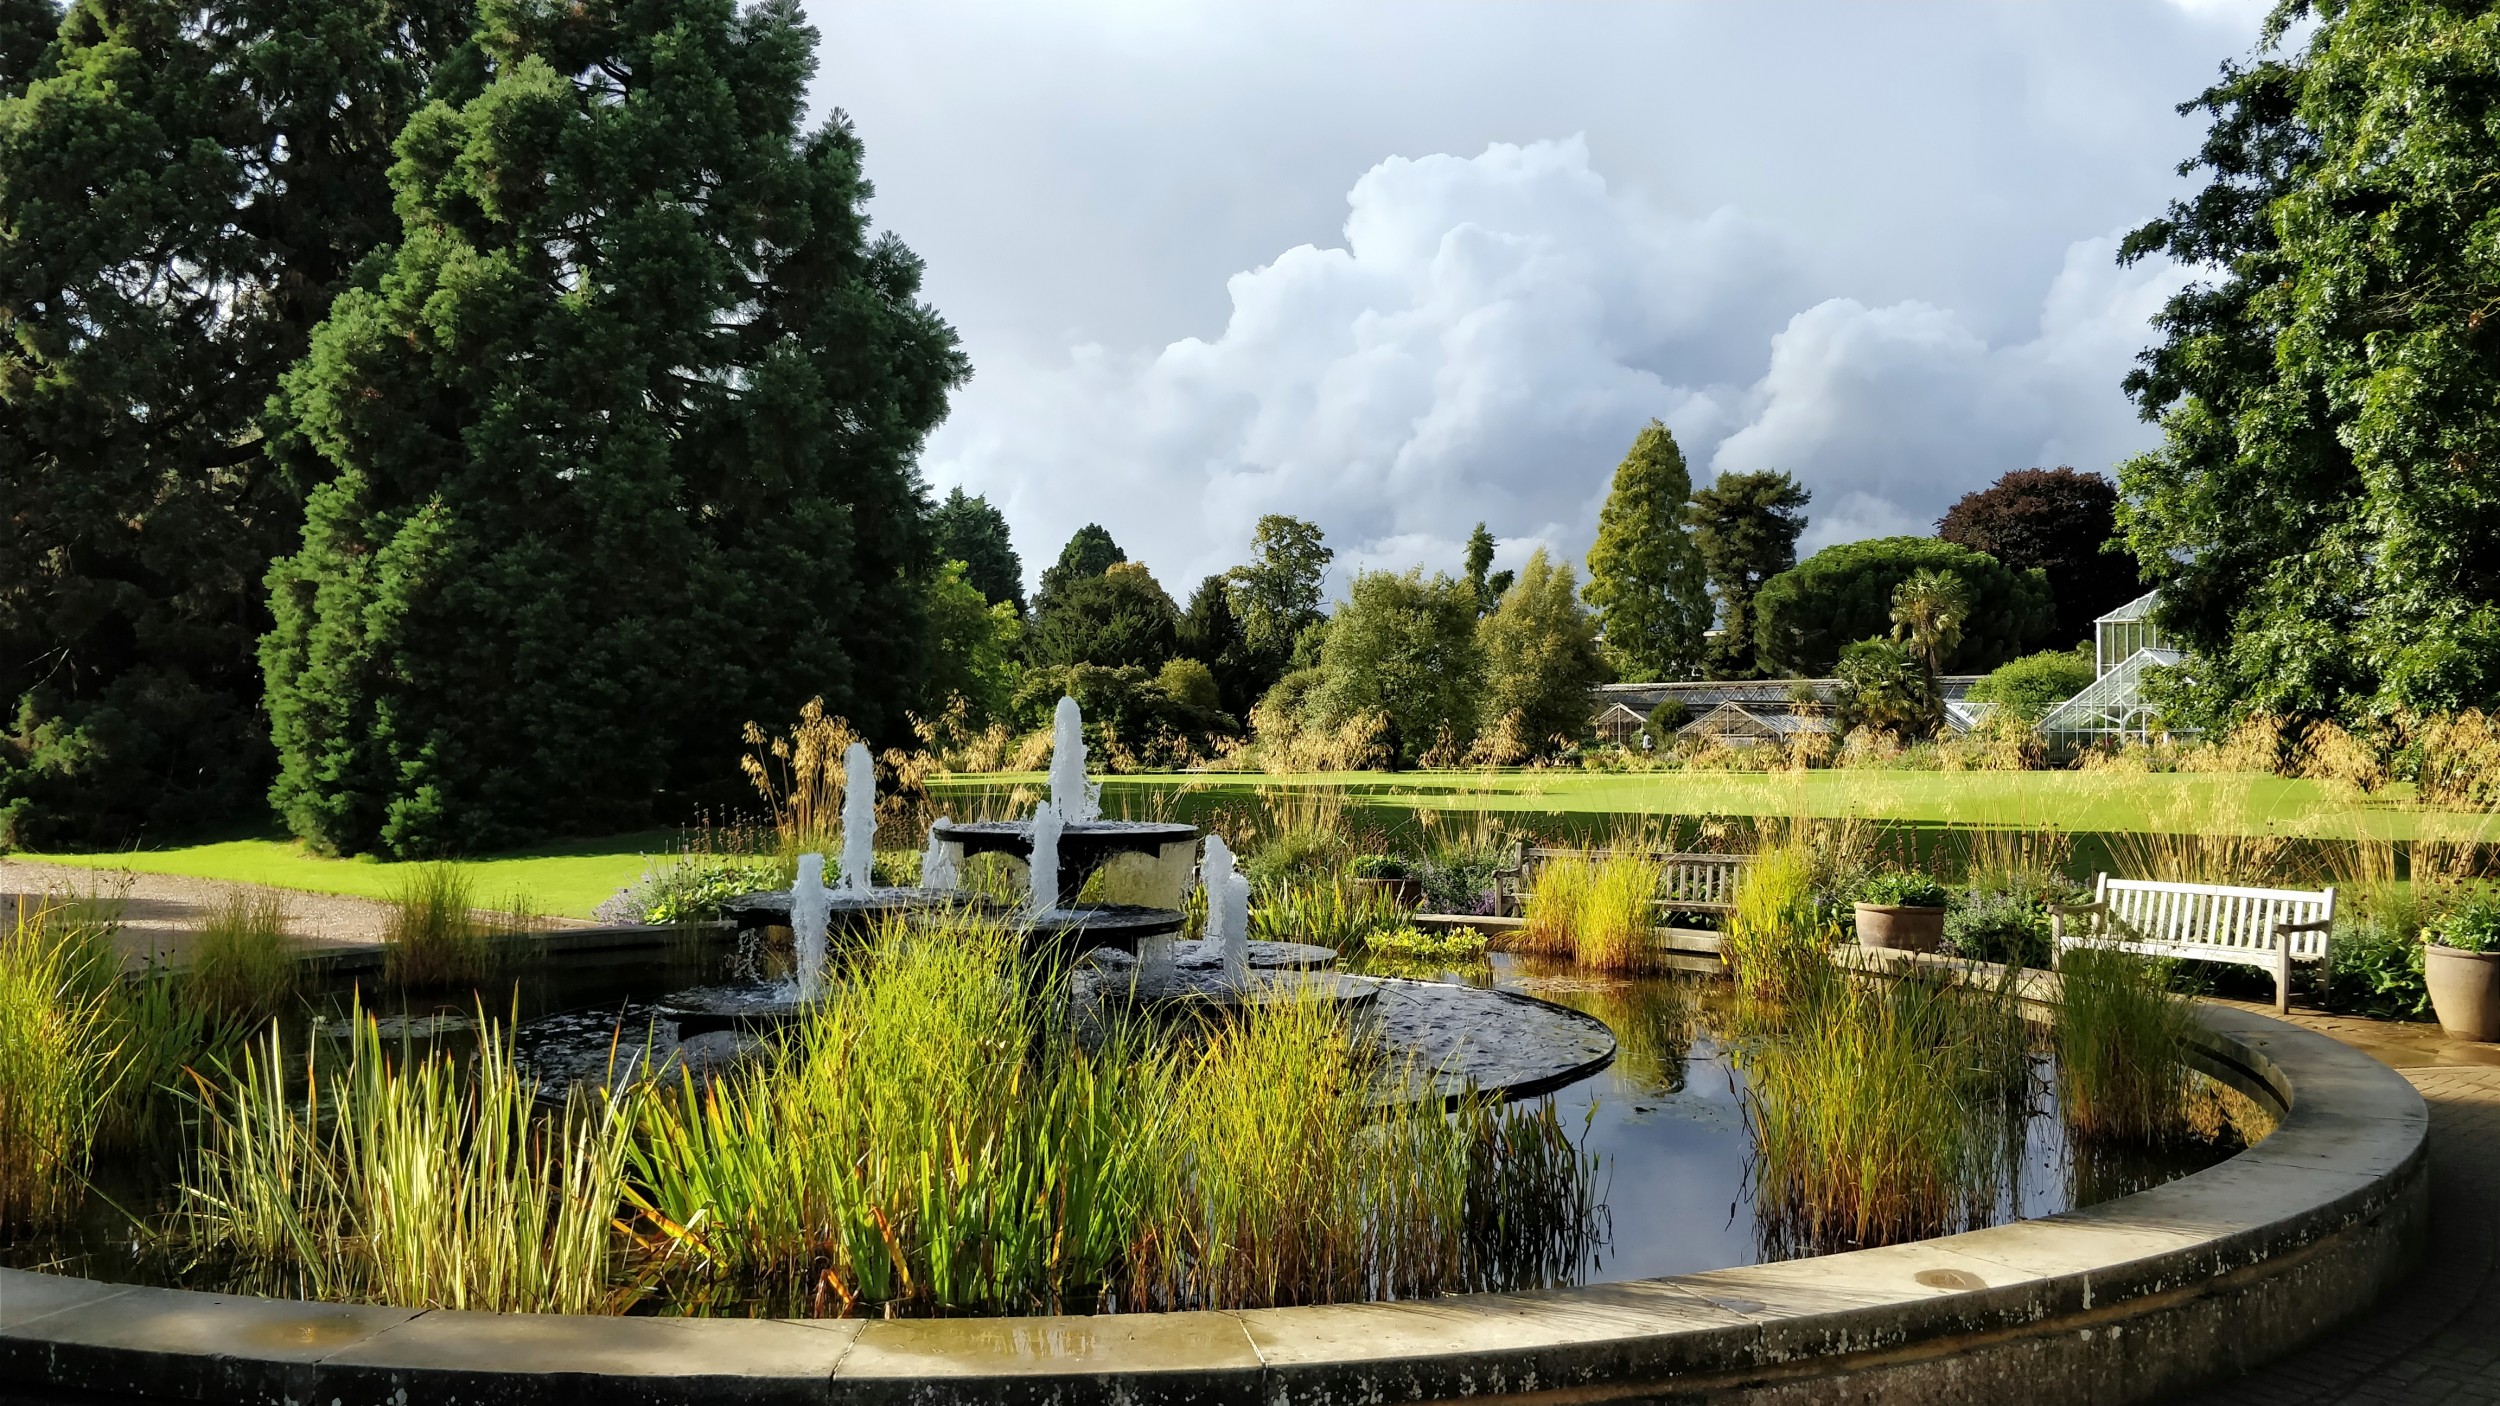 Cambridge University Botanic Garden | Visions of Travel